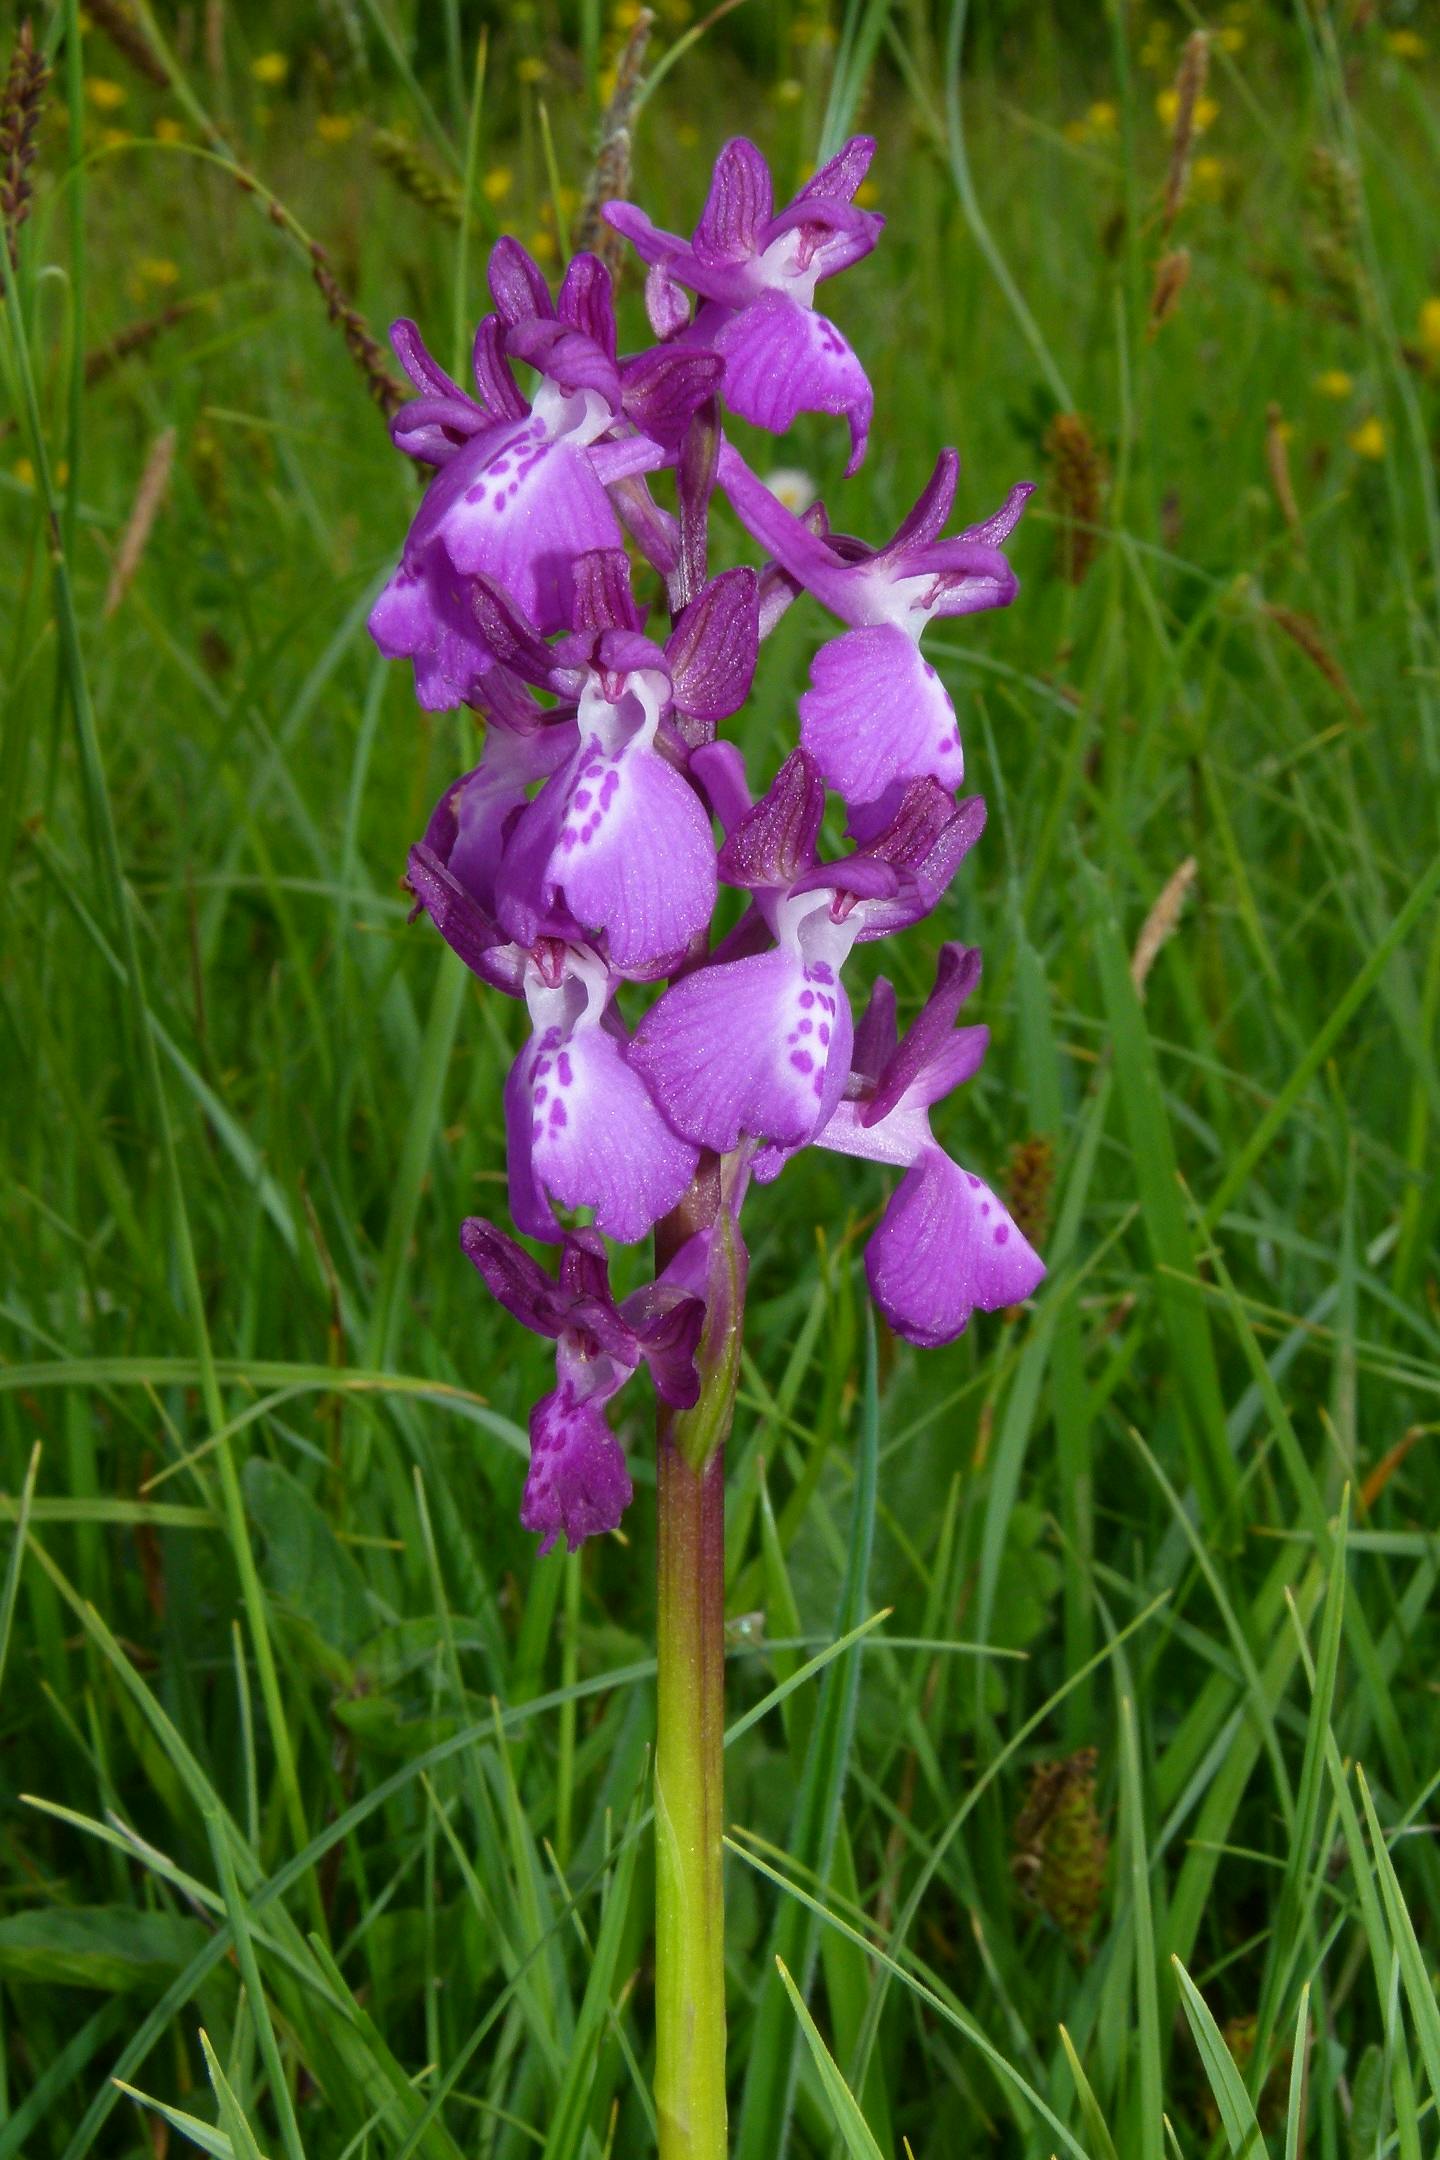 Flora spontanea a Boboli: le orchidee